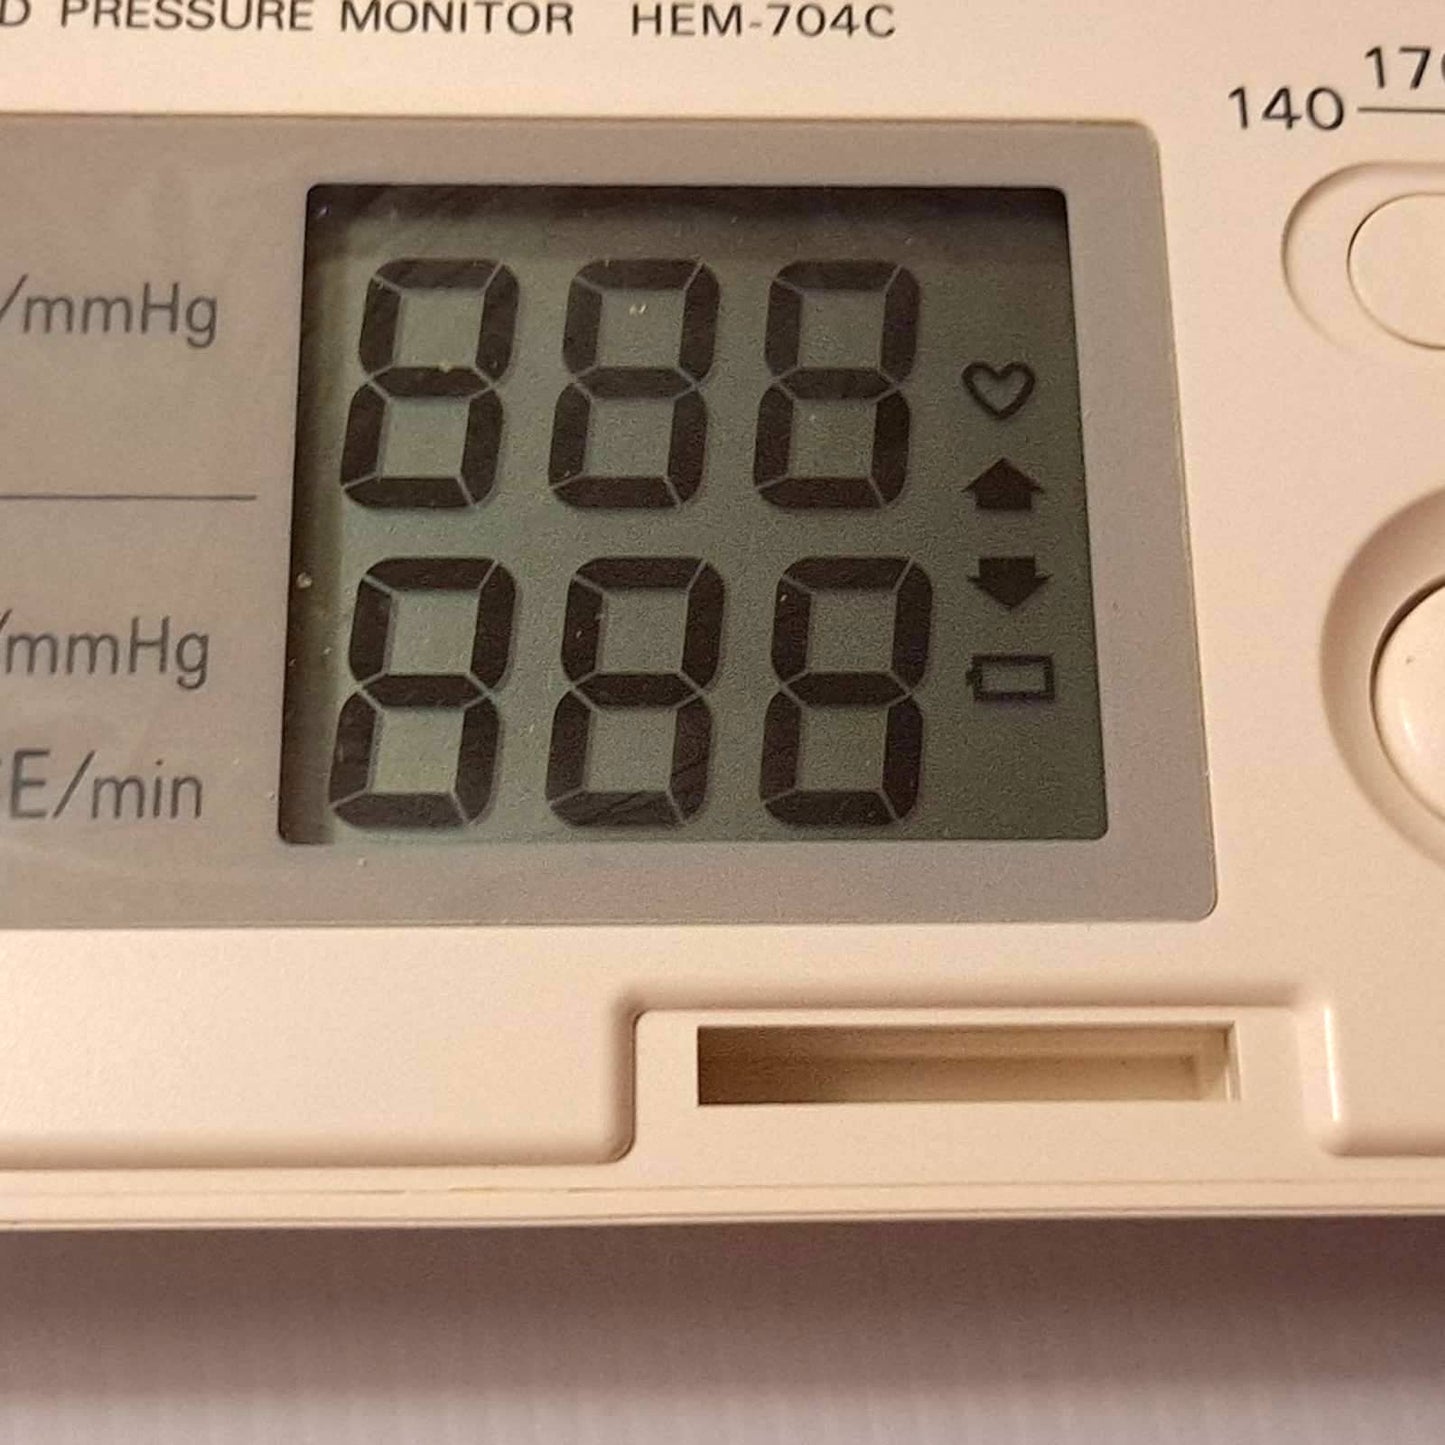 Automatic Oscillometric Digital Blood Pressure Monitor - tested